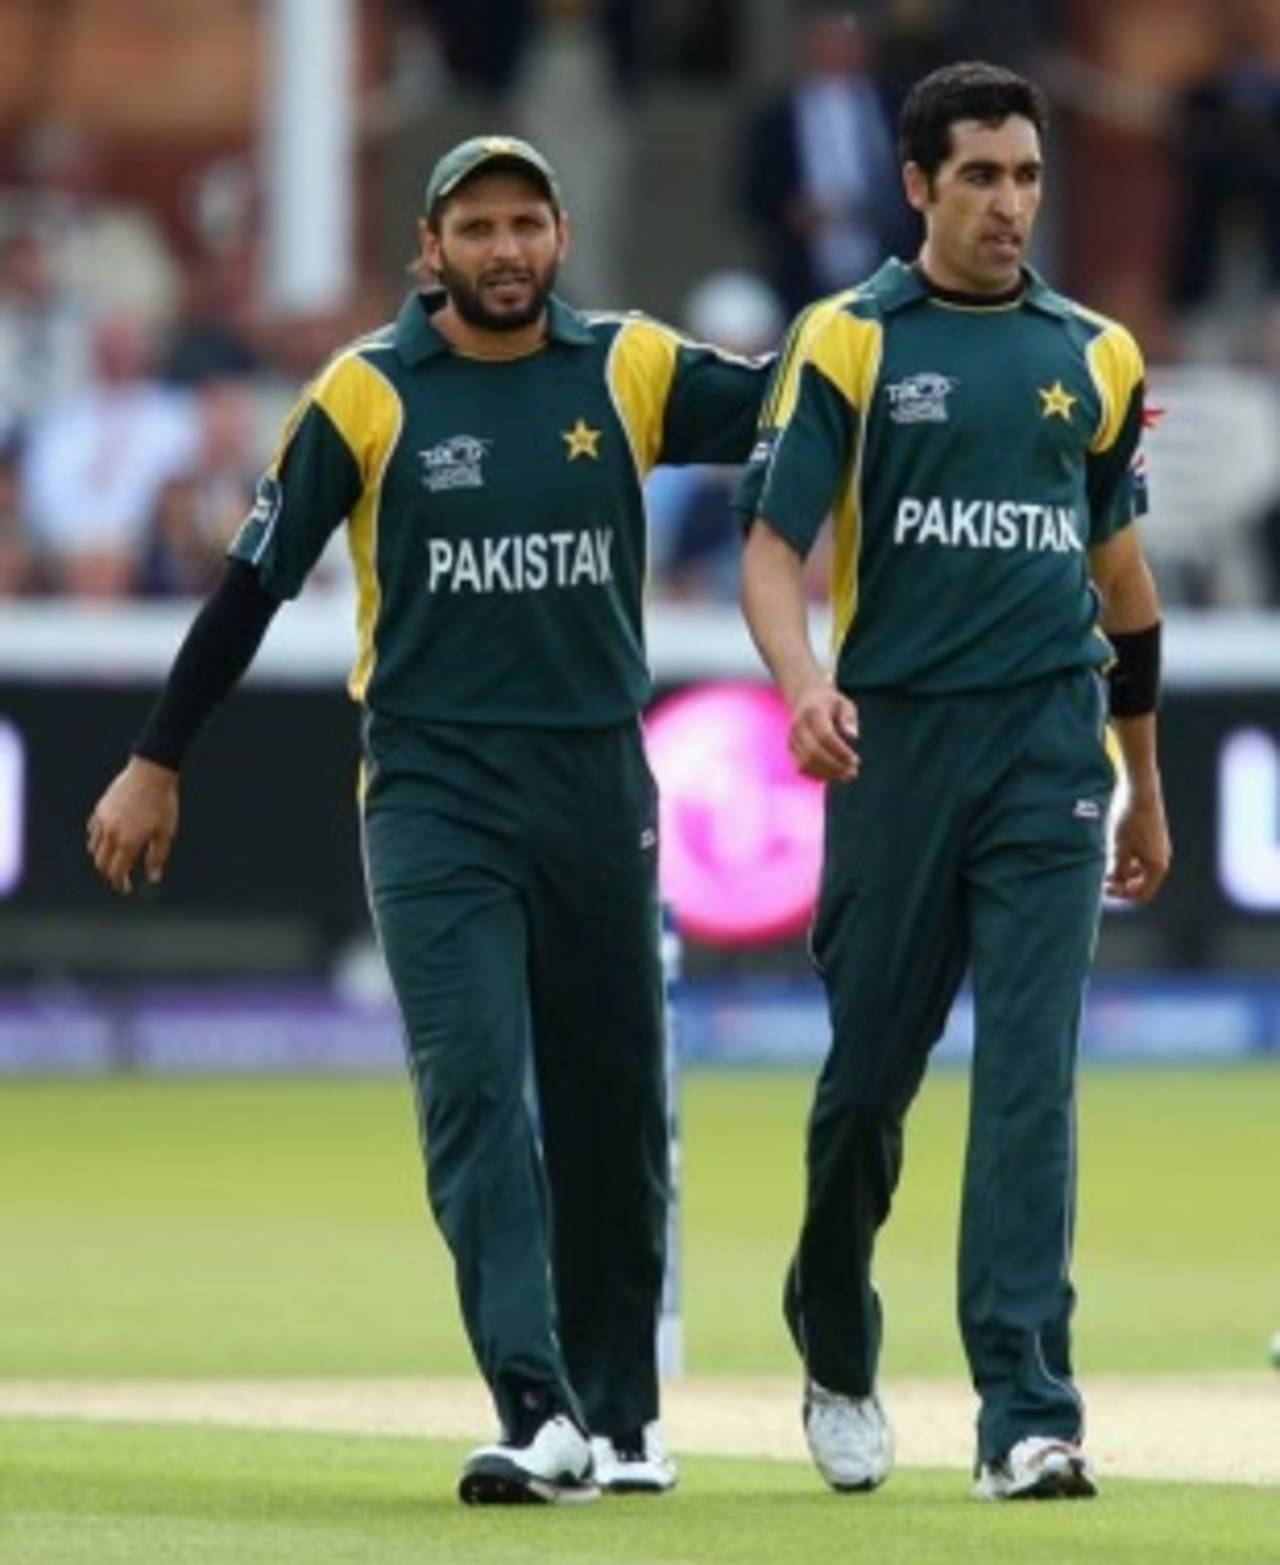 Shahid Afridi and Umar Gul were among the 11 Pakistan cricketers who were not bid for&nbsp;&nbsp;&bull;&nbsp;&nbsp;Richard Heathcote/Getty Images